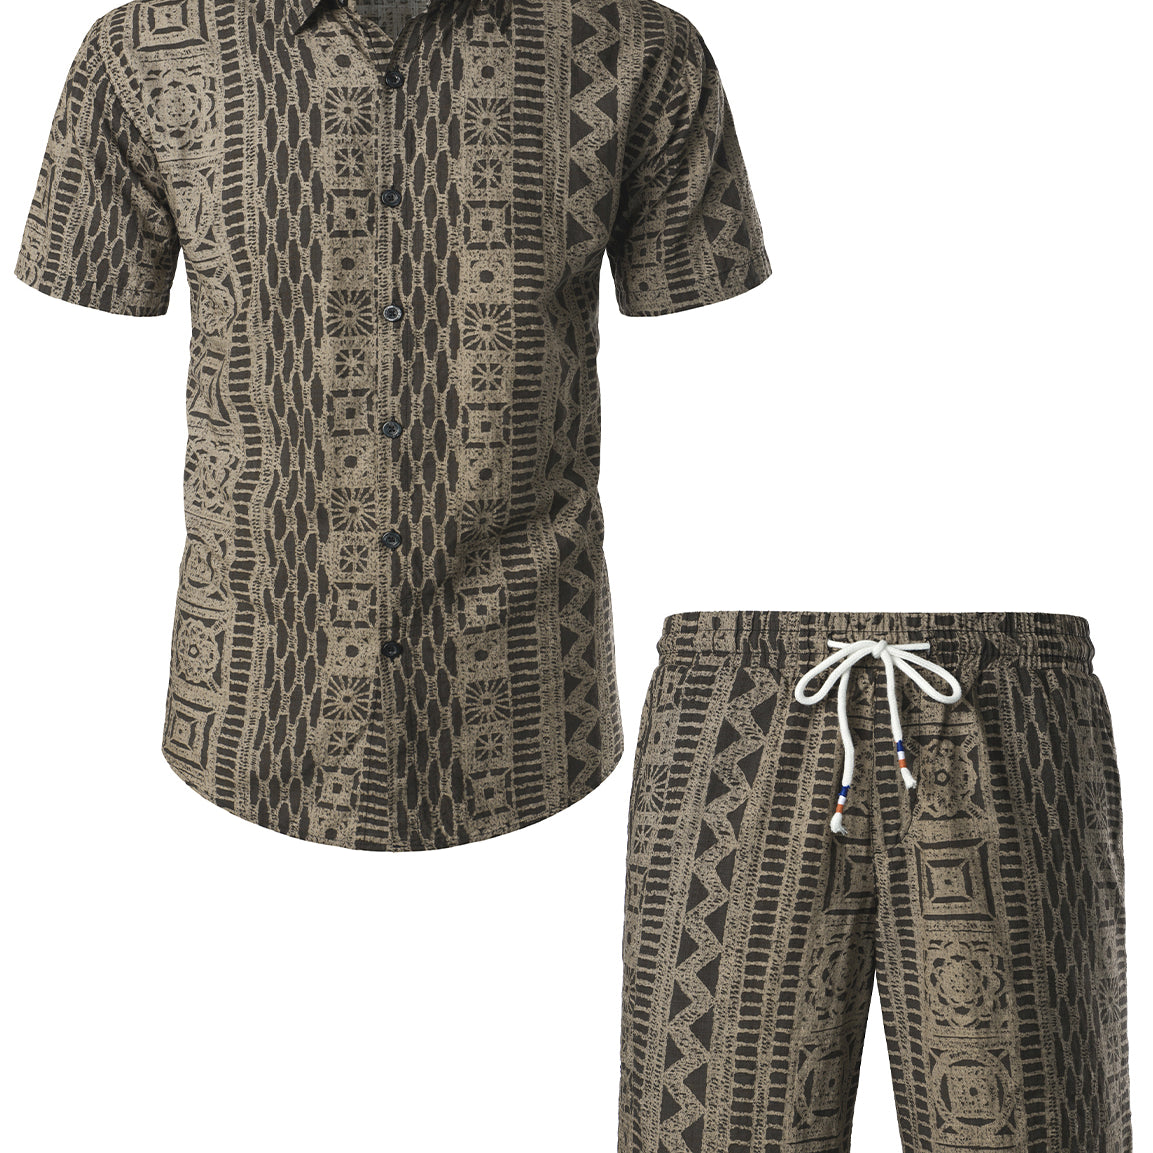 Men's Tribal Boho Short Sleeve Matching Shirt and Shorts Set